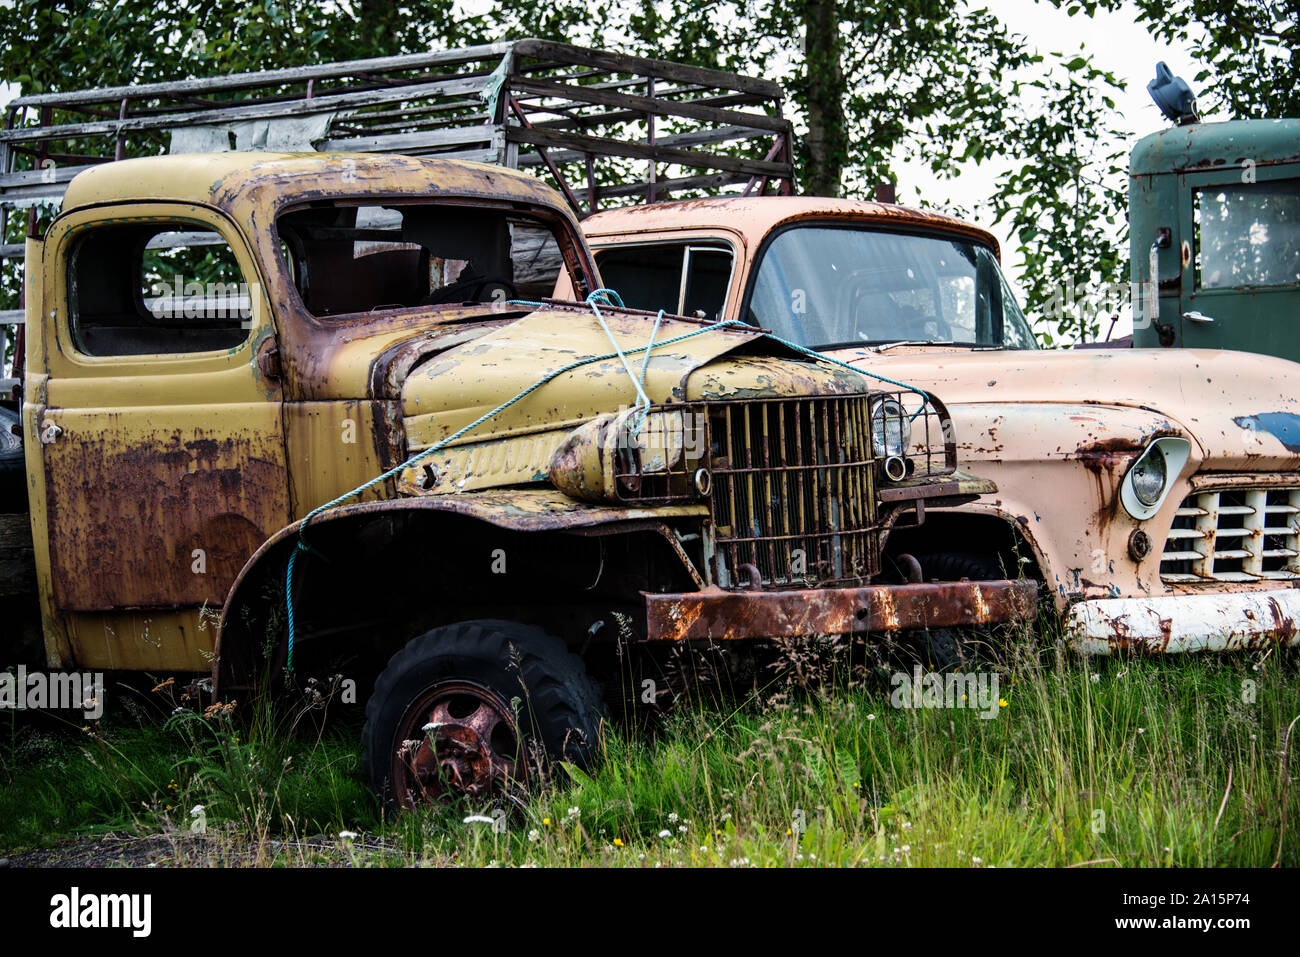 Old rustbucket discolored vehicle Stock Photo